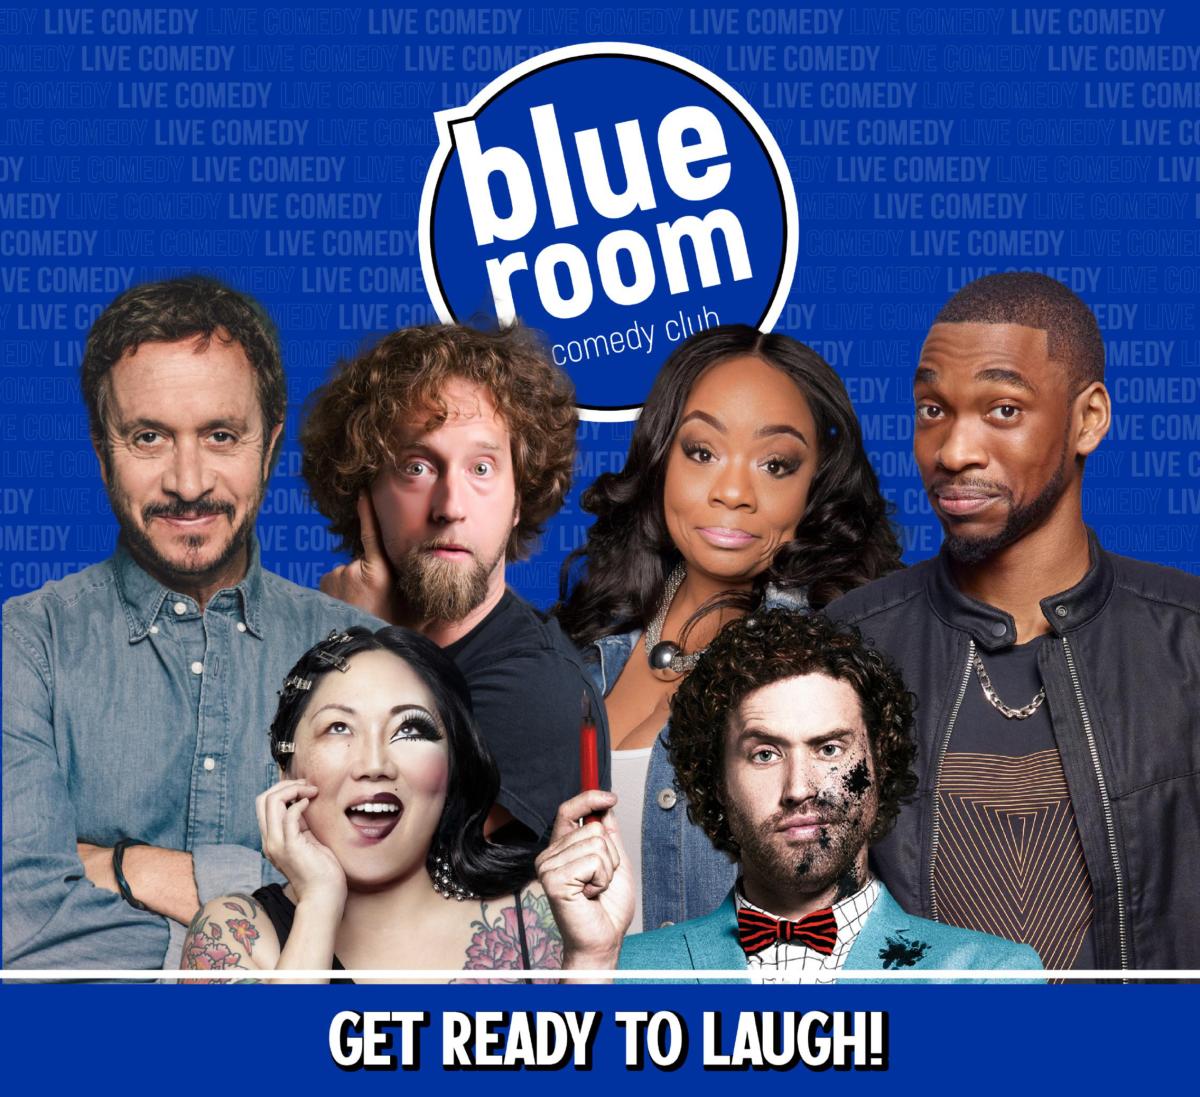 Blue Room Comedy Club Ad